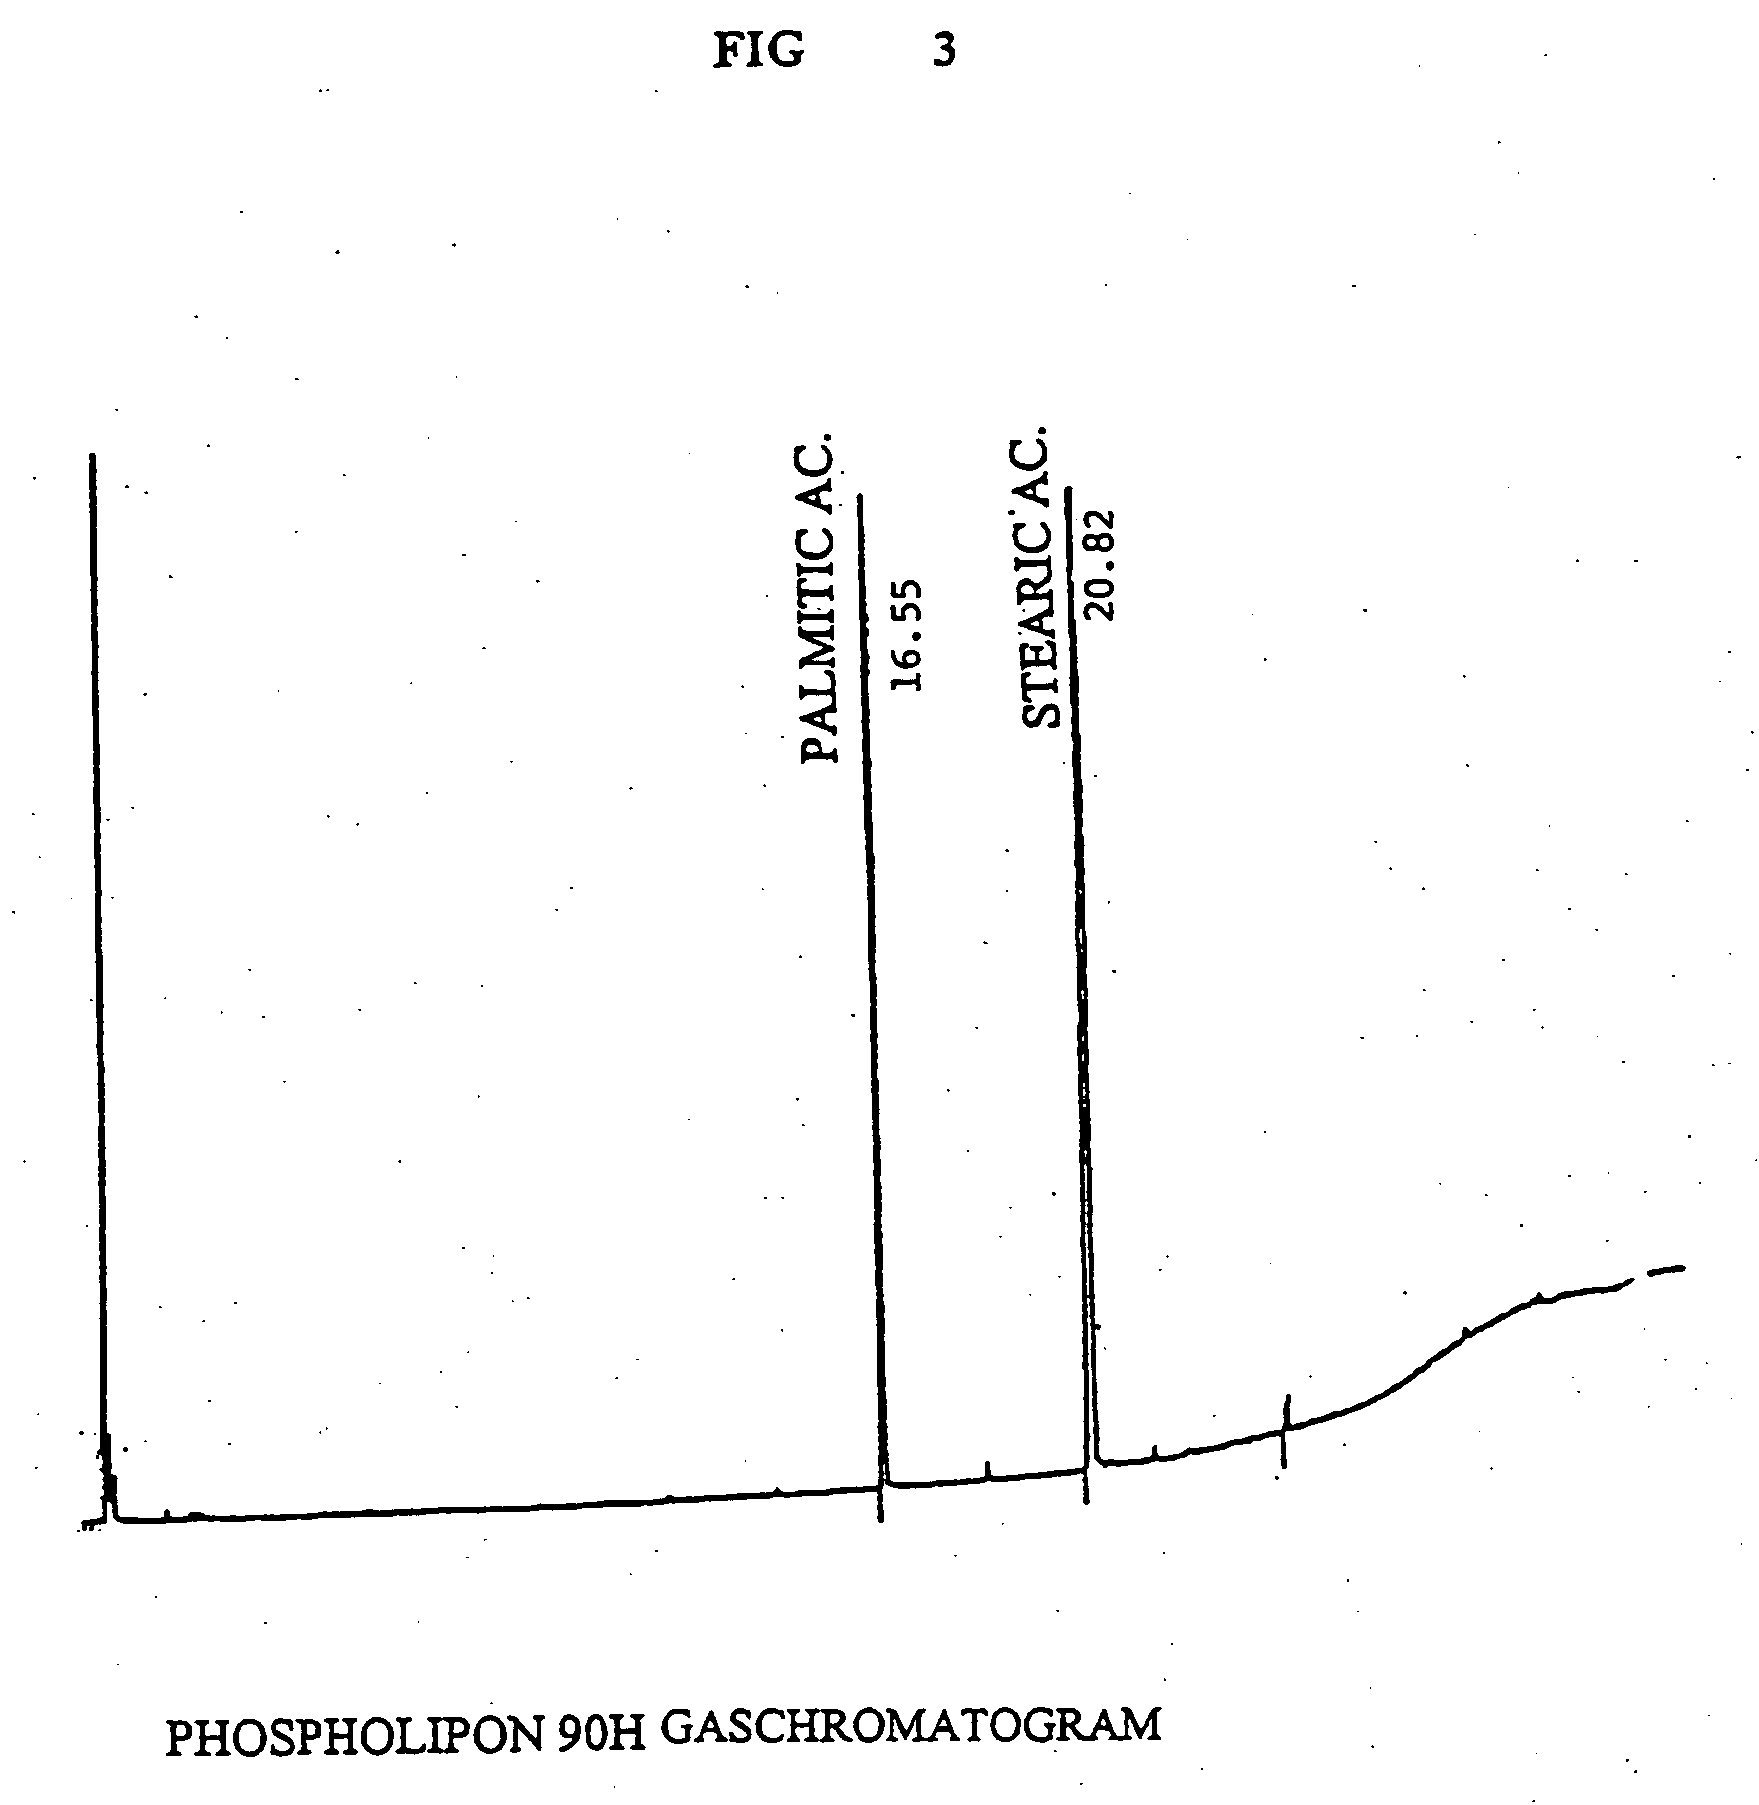 Liposome formulation of 6,9-bis[(2-aminoethyl)-amino]benzo[g]isoquinoline-5, 10-dione dimaleate